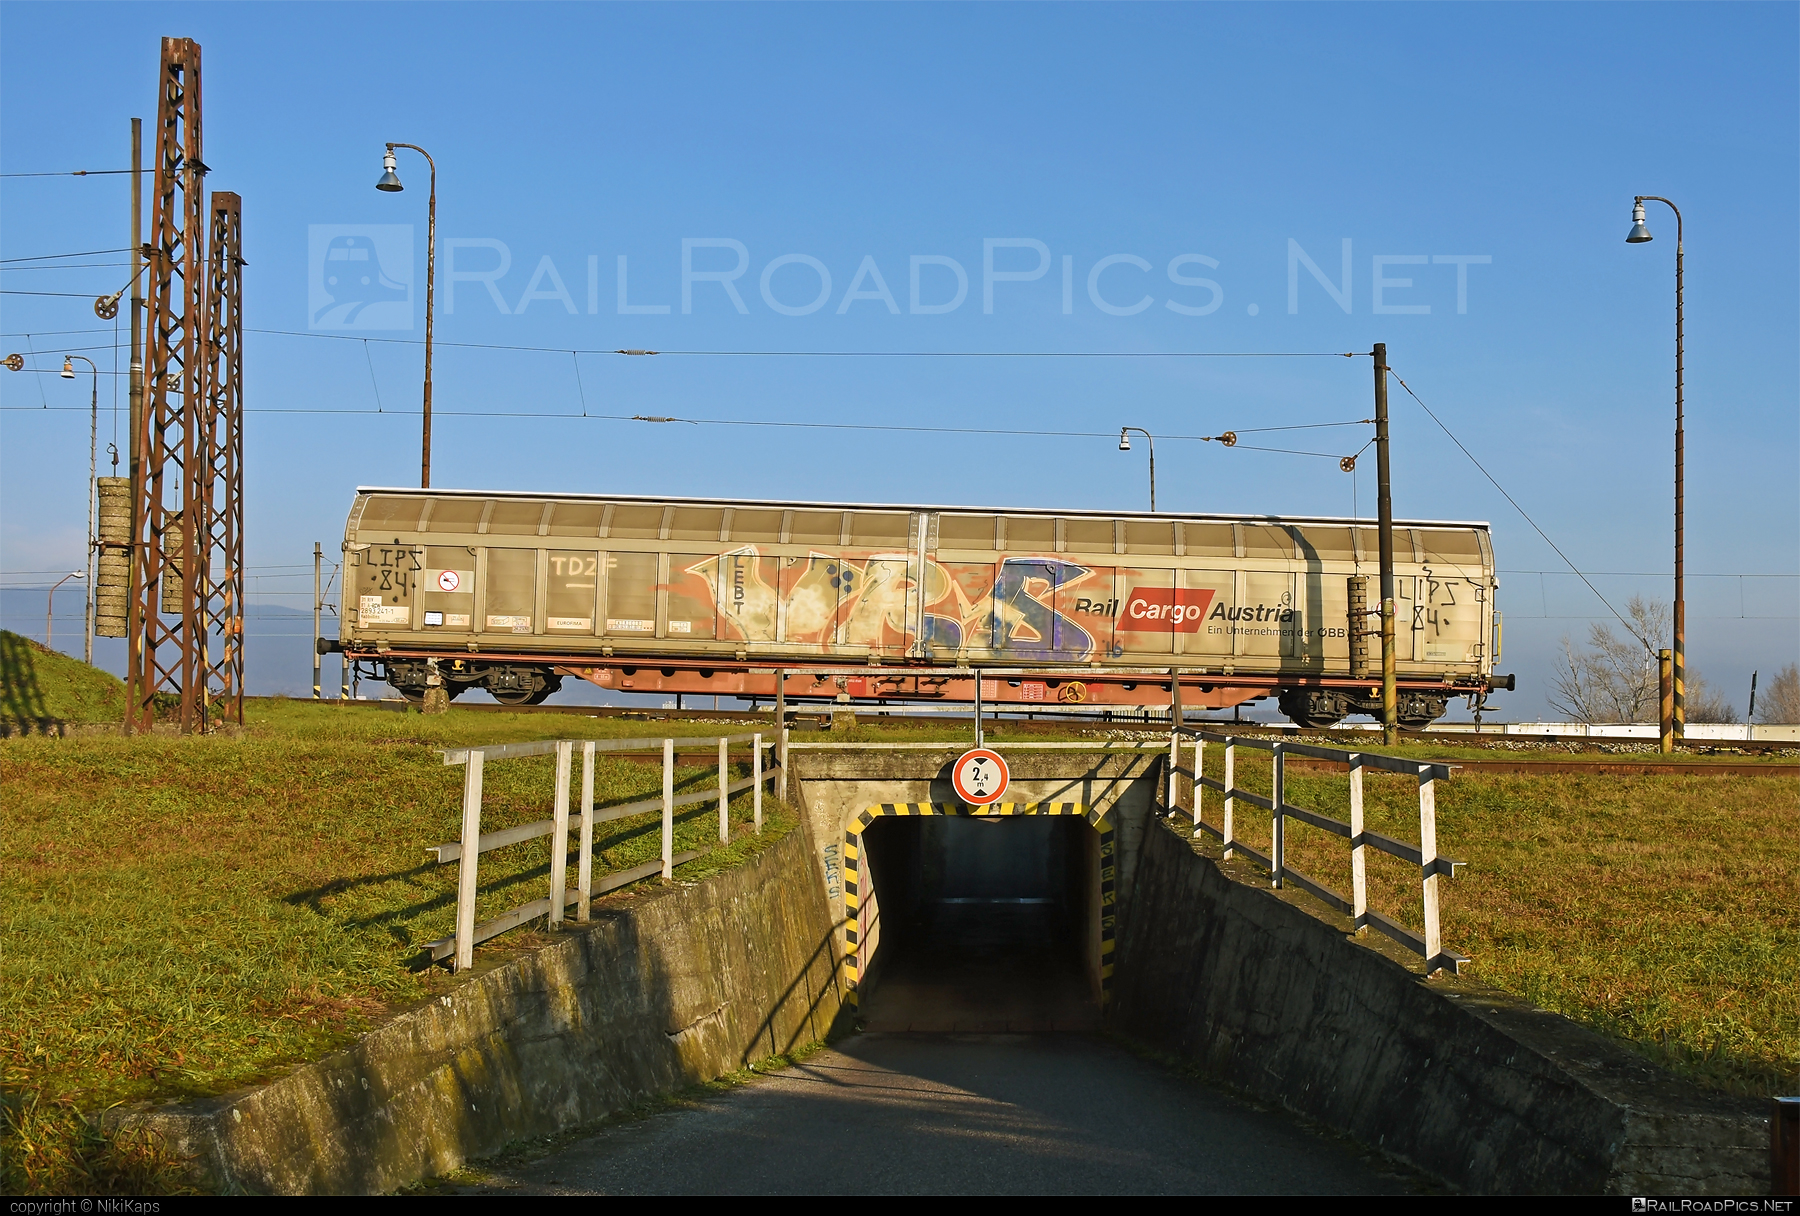 Class H - Habbillns - 2893 241-1 operated by Rail Cargo Austria AG #bridge #graffiti #habbillns #rcw